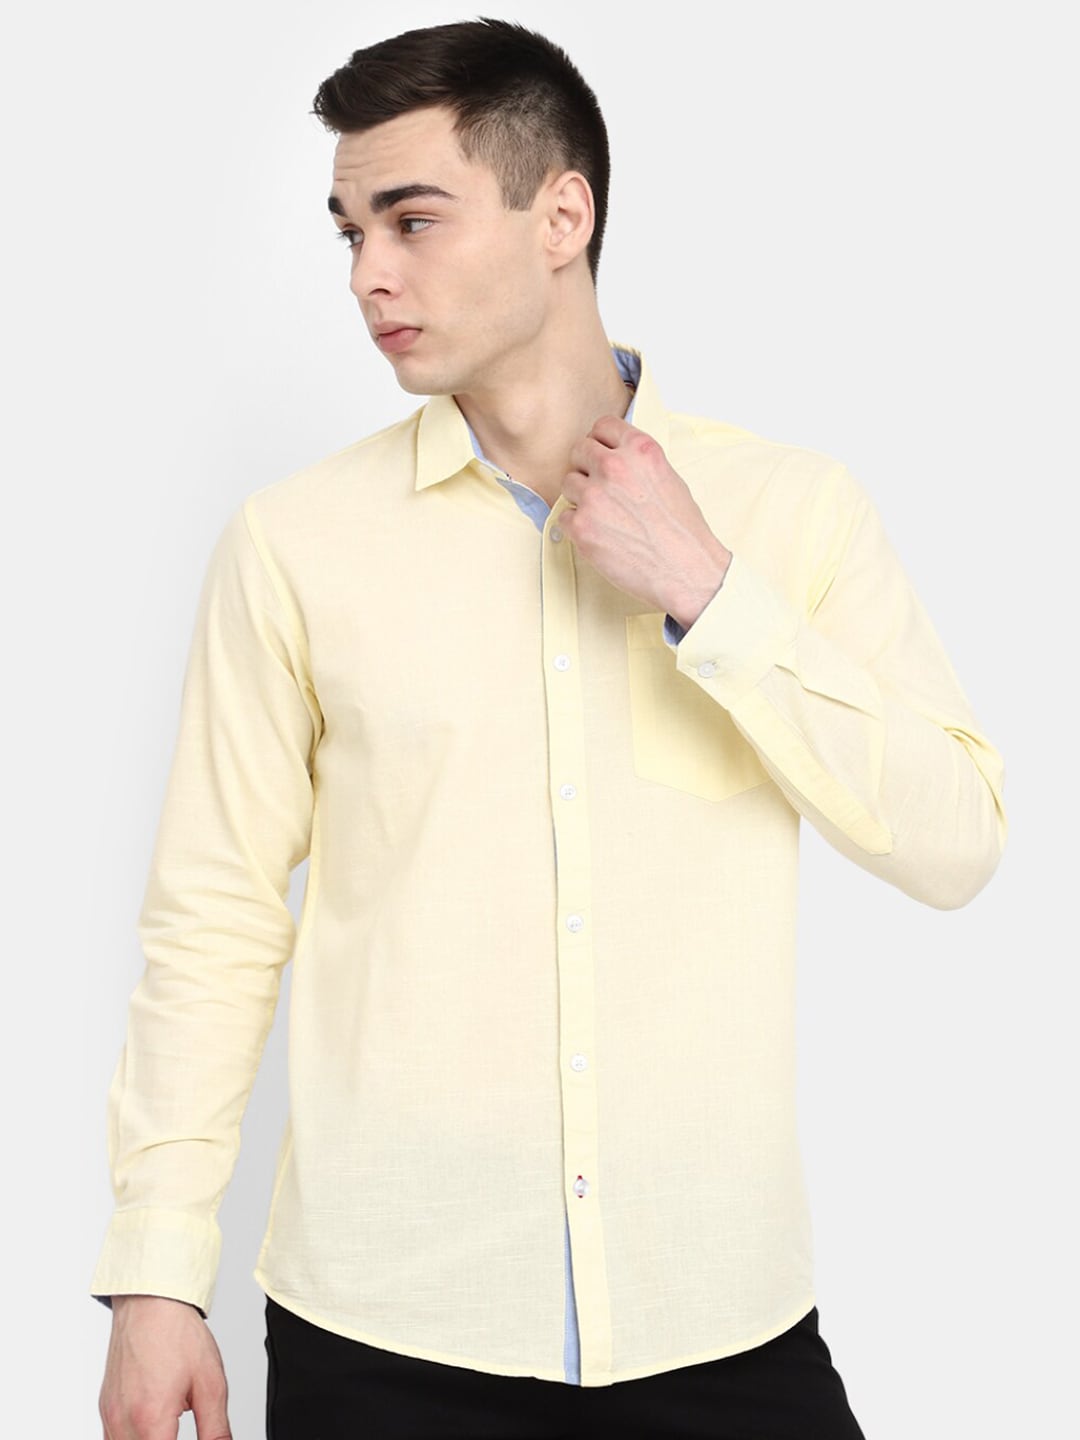 V-Mart Classic Spread Collar Cotton Casual Shirt